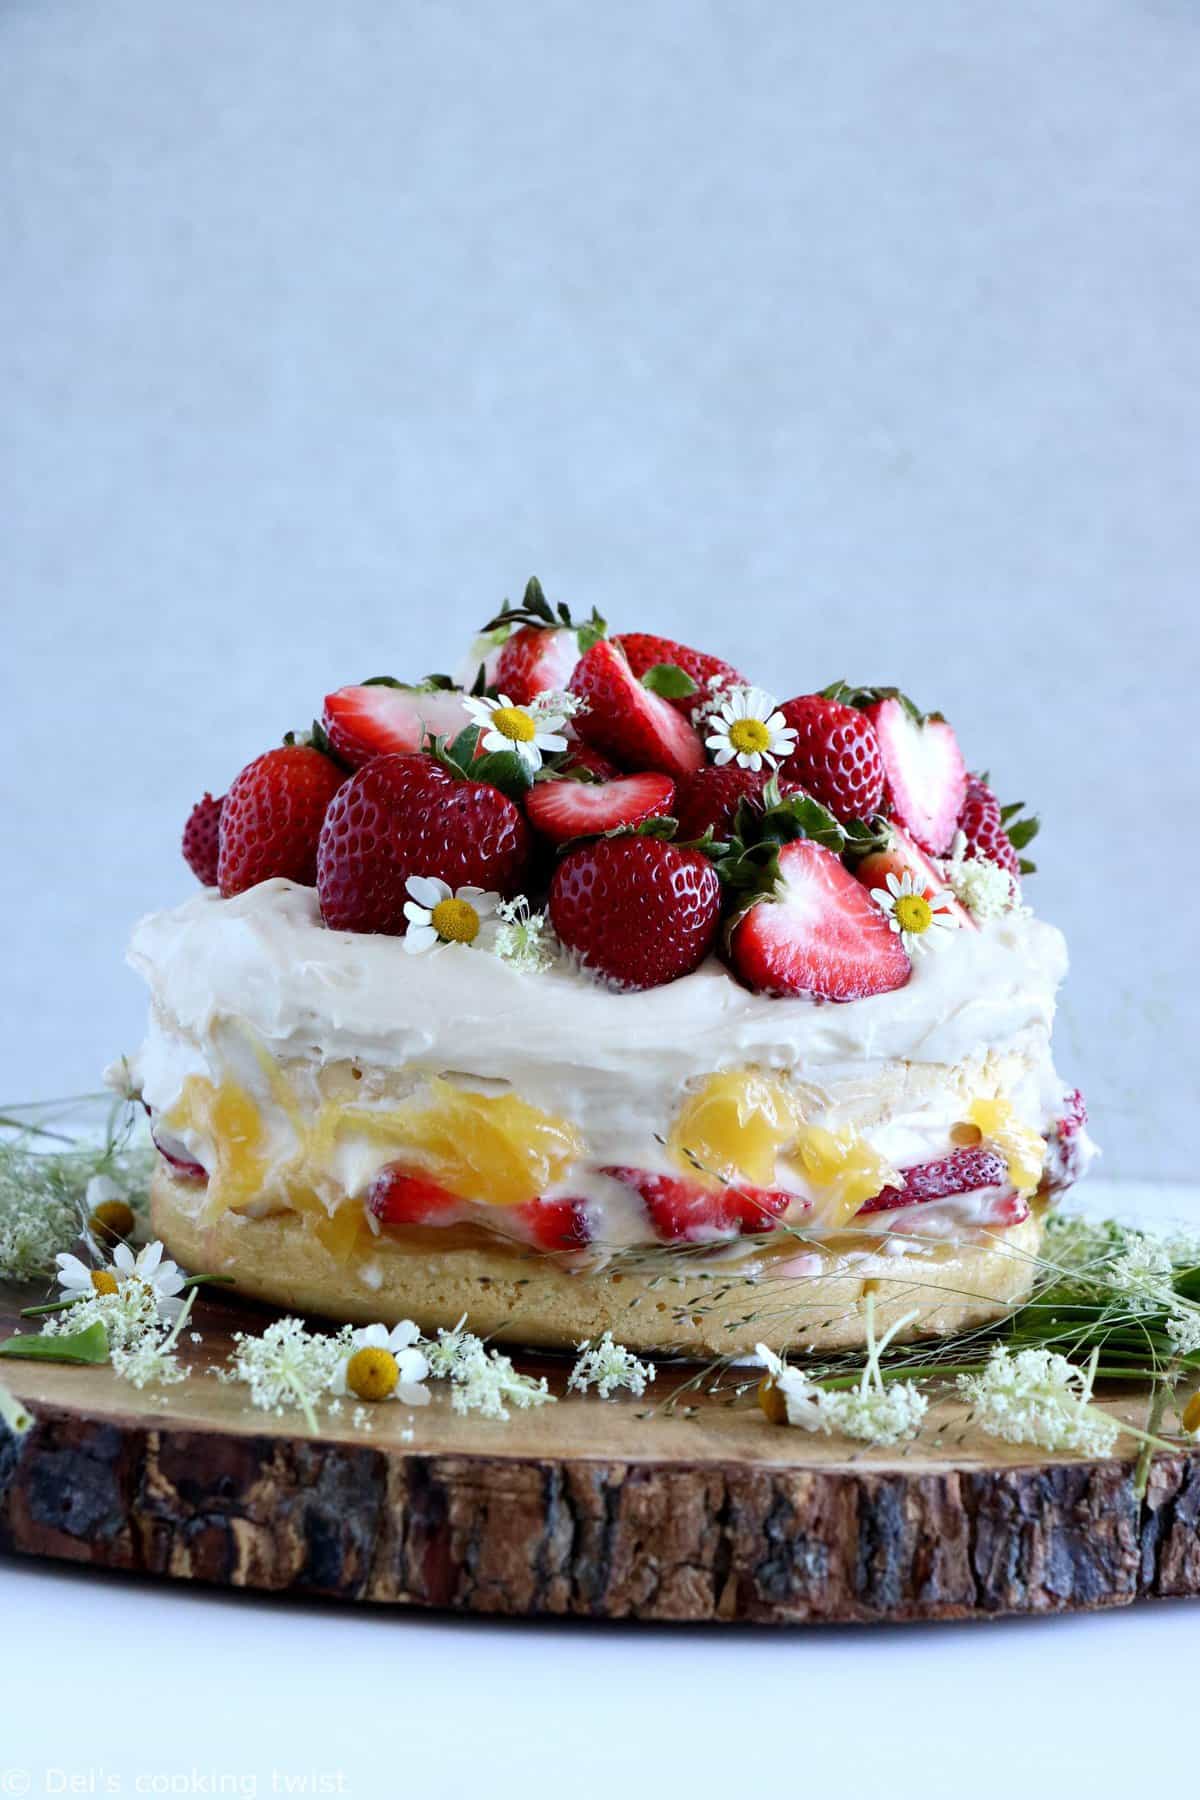 Swedish Midsummer Strawberry Cake (Midsommartårta) - Del's cooking twist